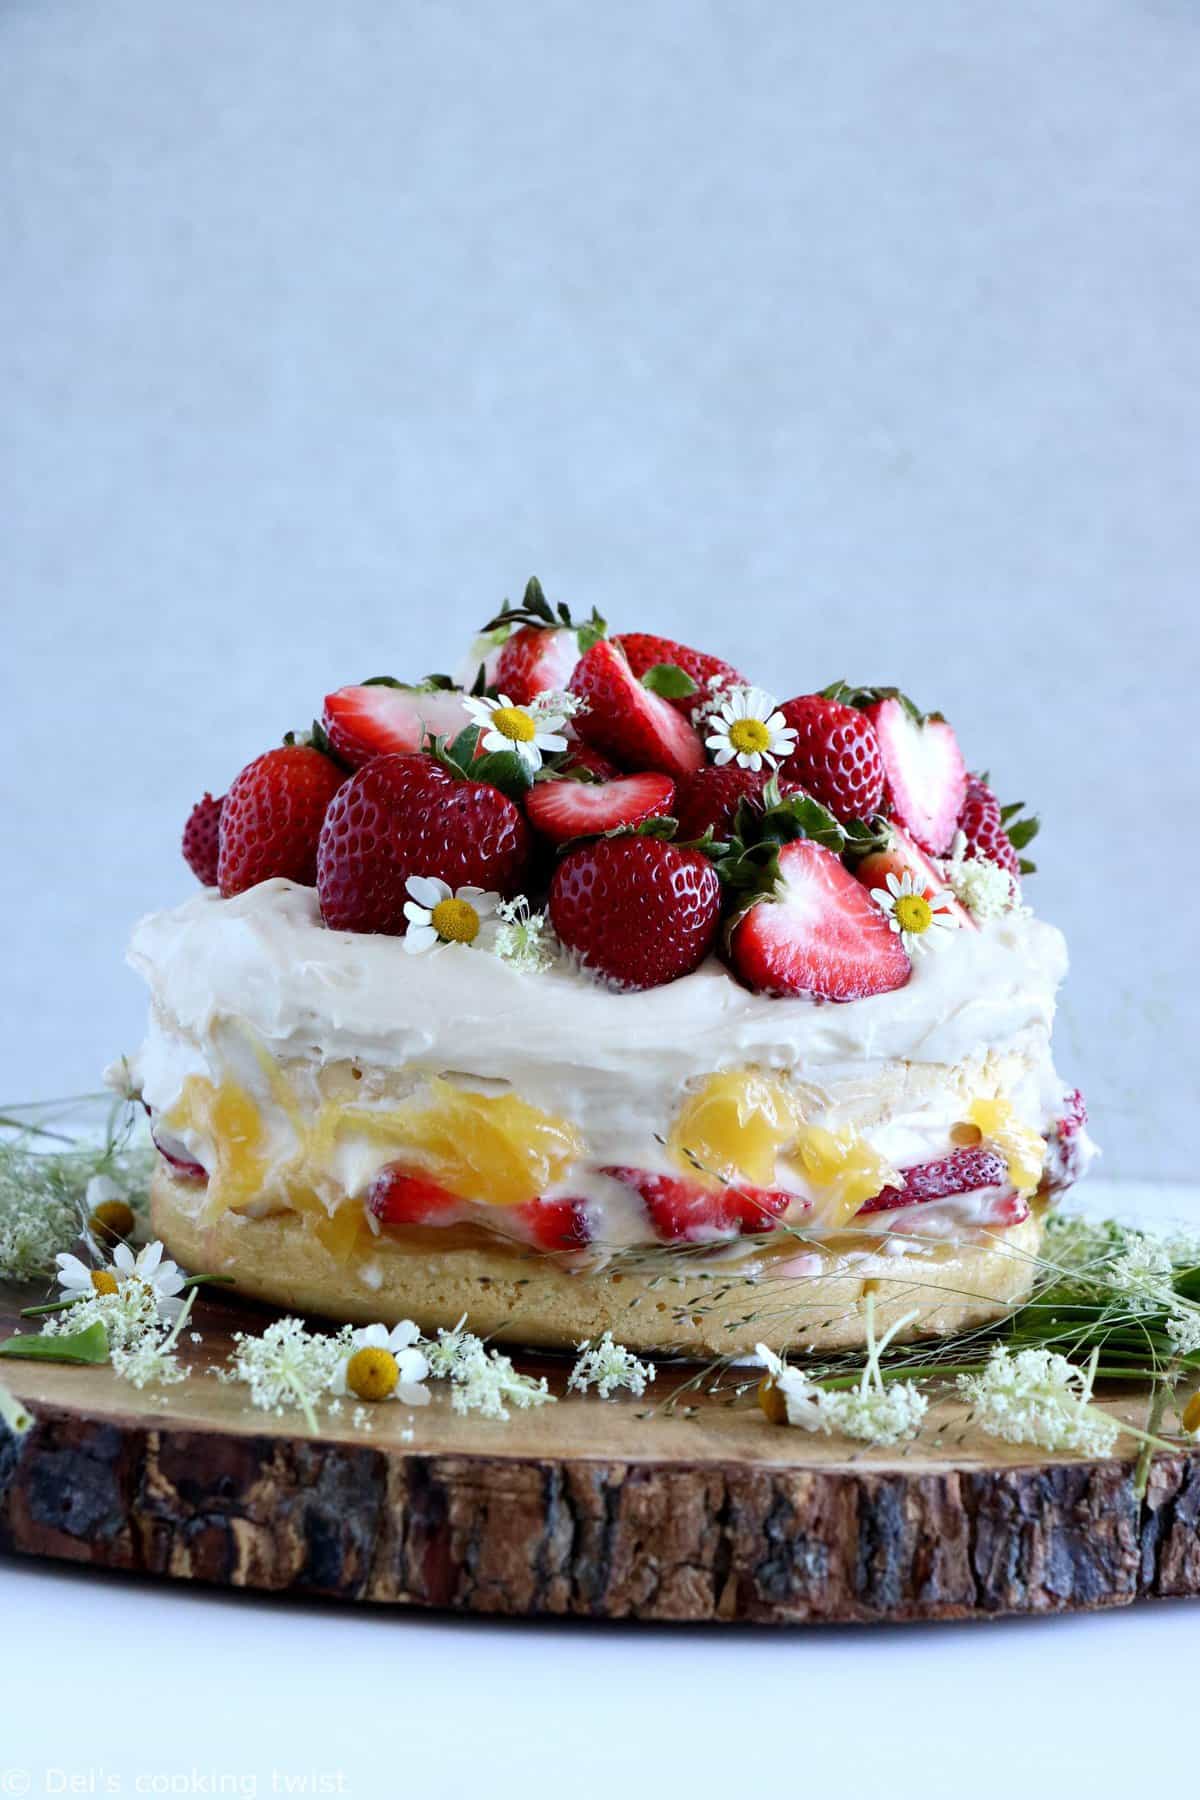 Swedish Midsummer Strawberry Cake (Midsommartårta) - Del's cooking twist